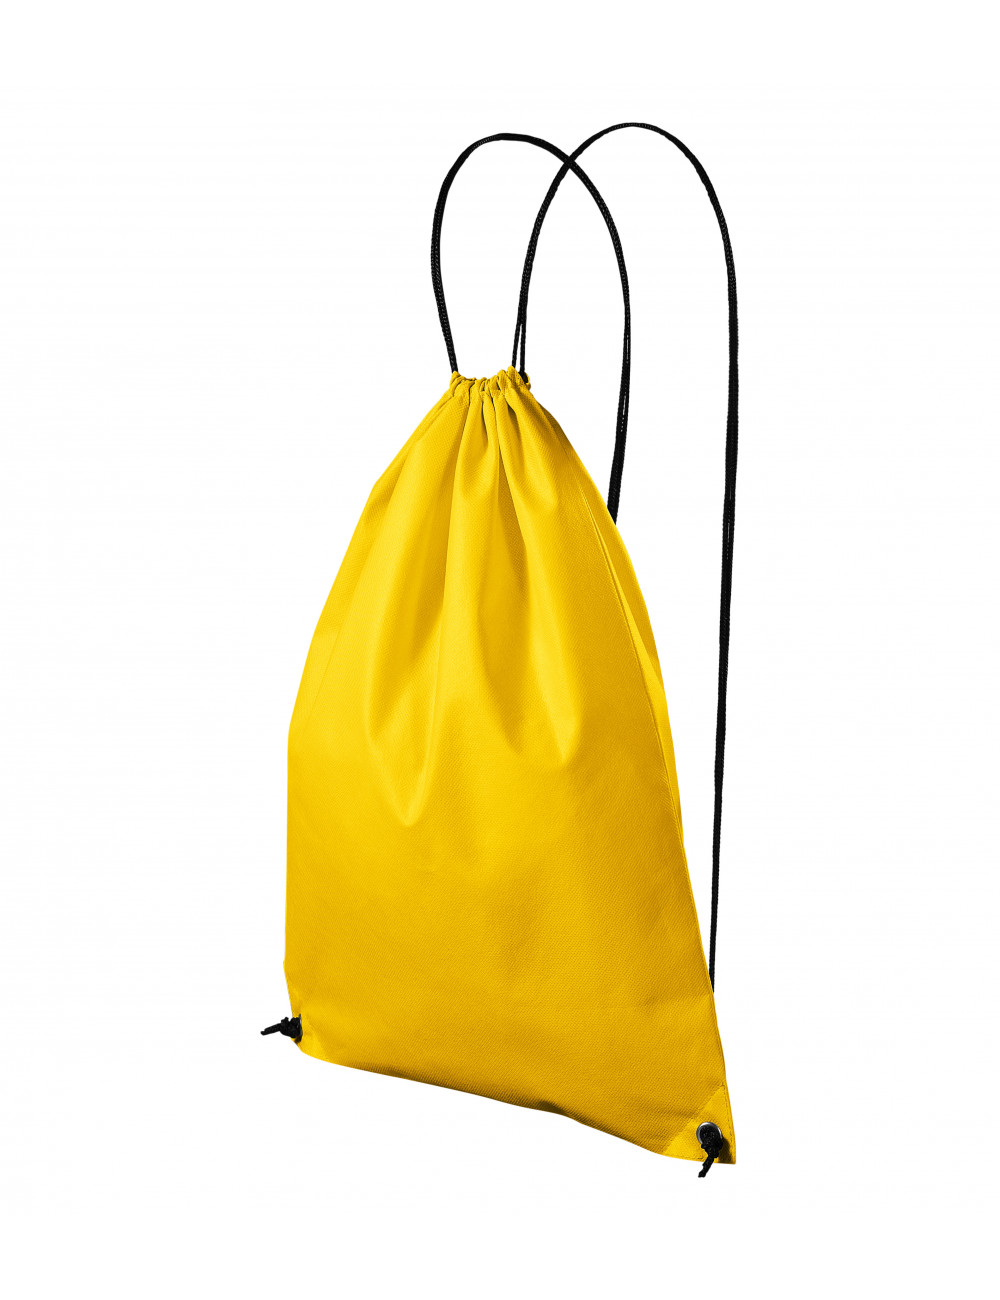 Beetle p92 unisex backpack yellow Adler Piccolio